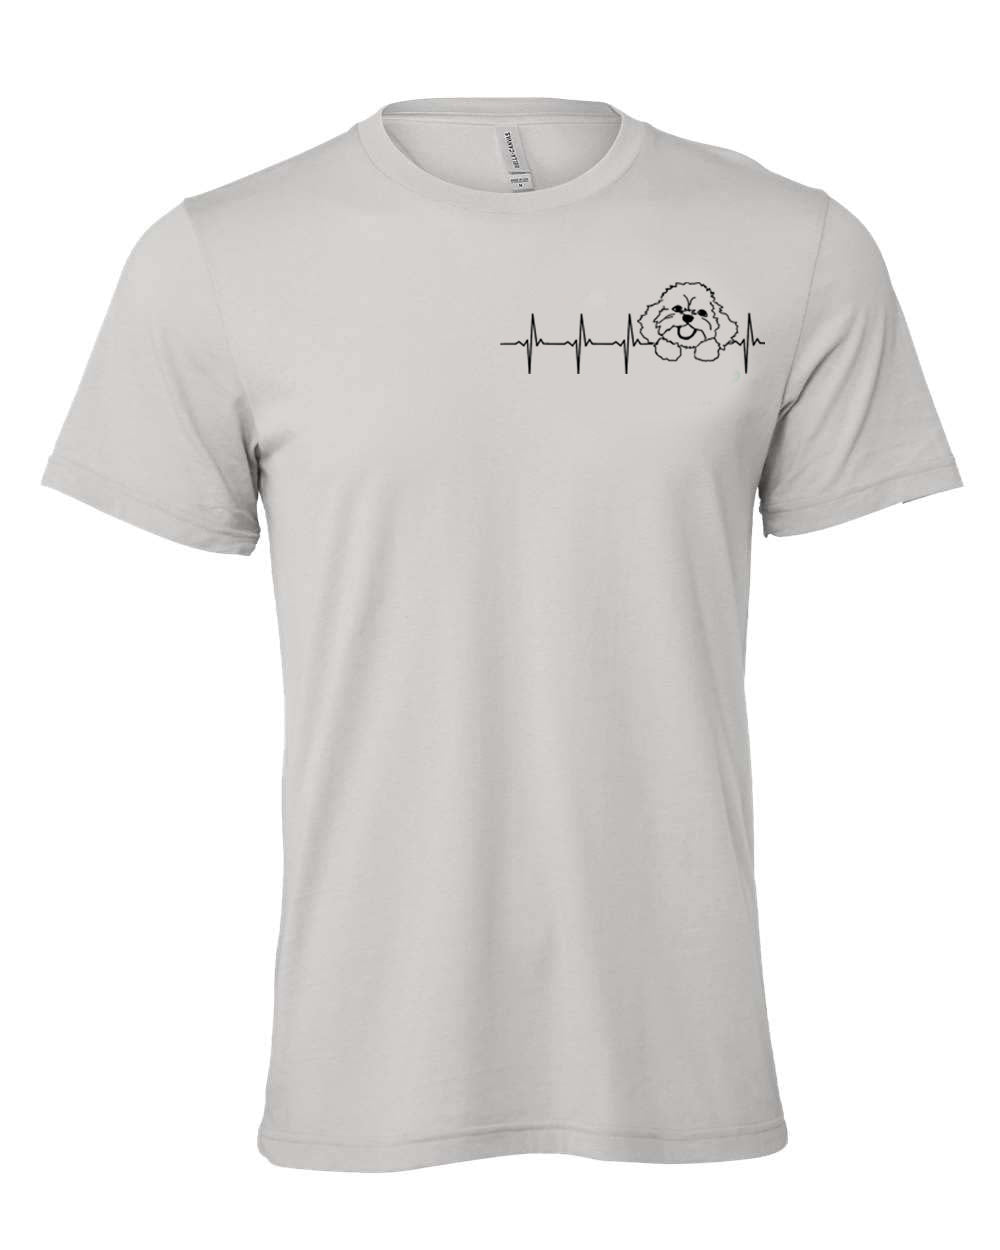 Bichon Heartbeat on Men's T-shirt